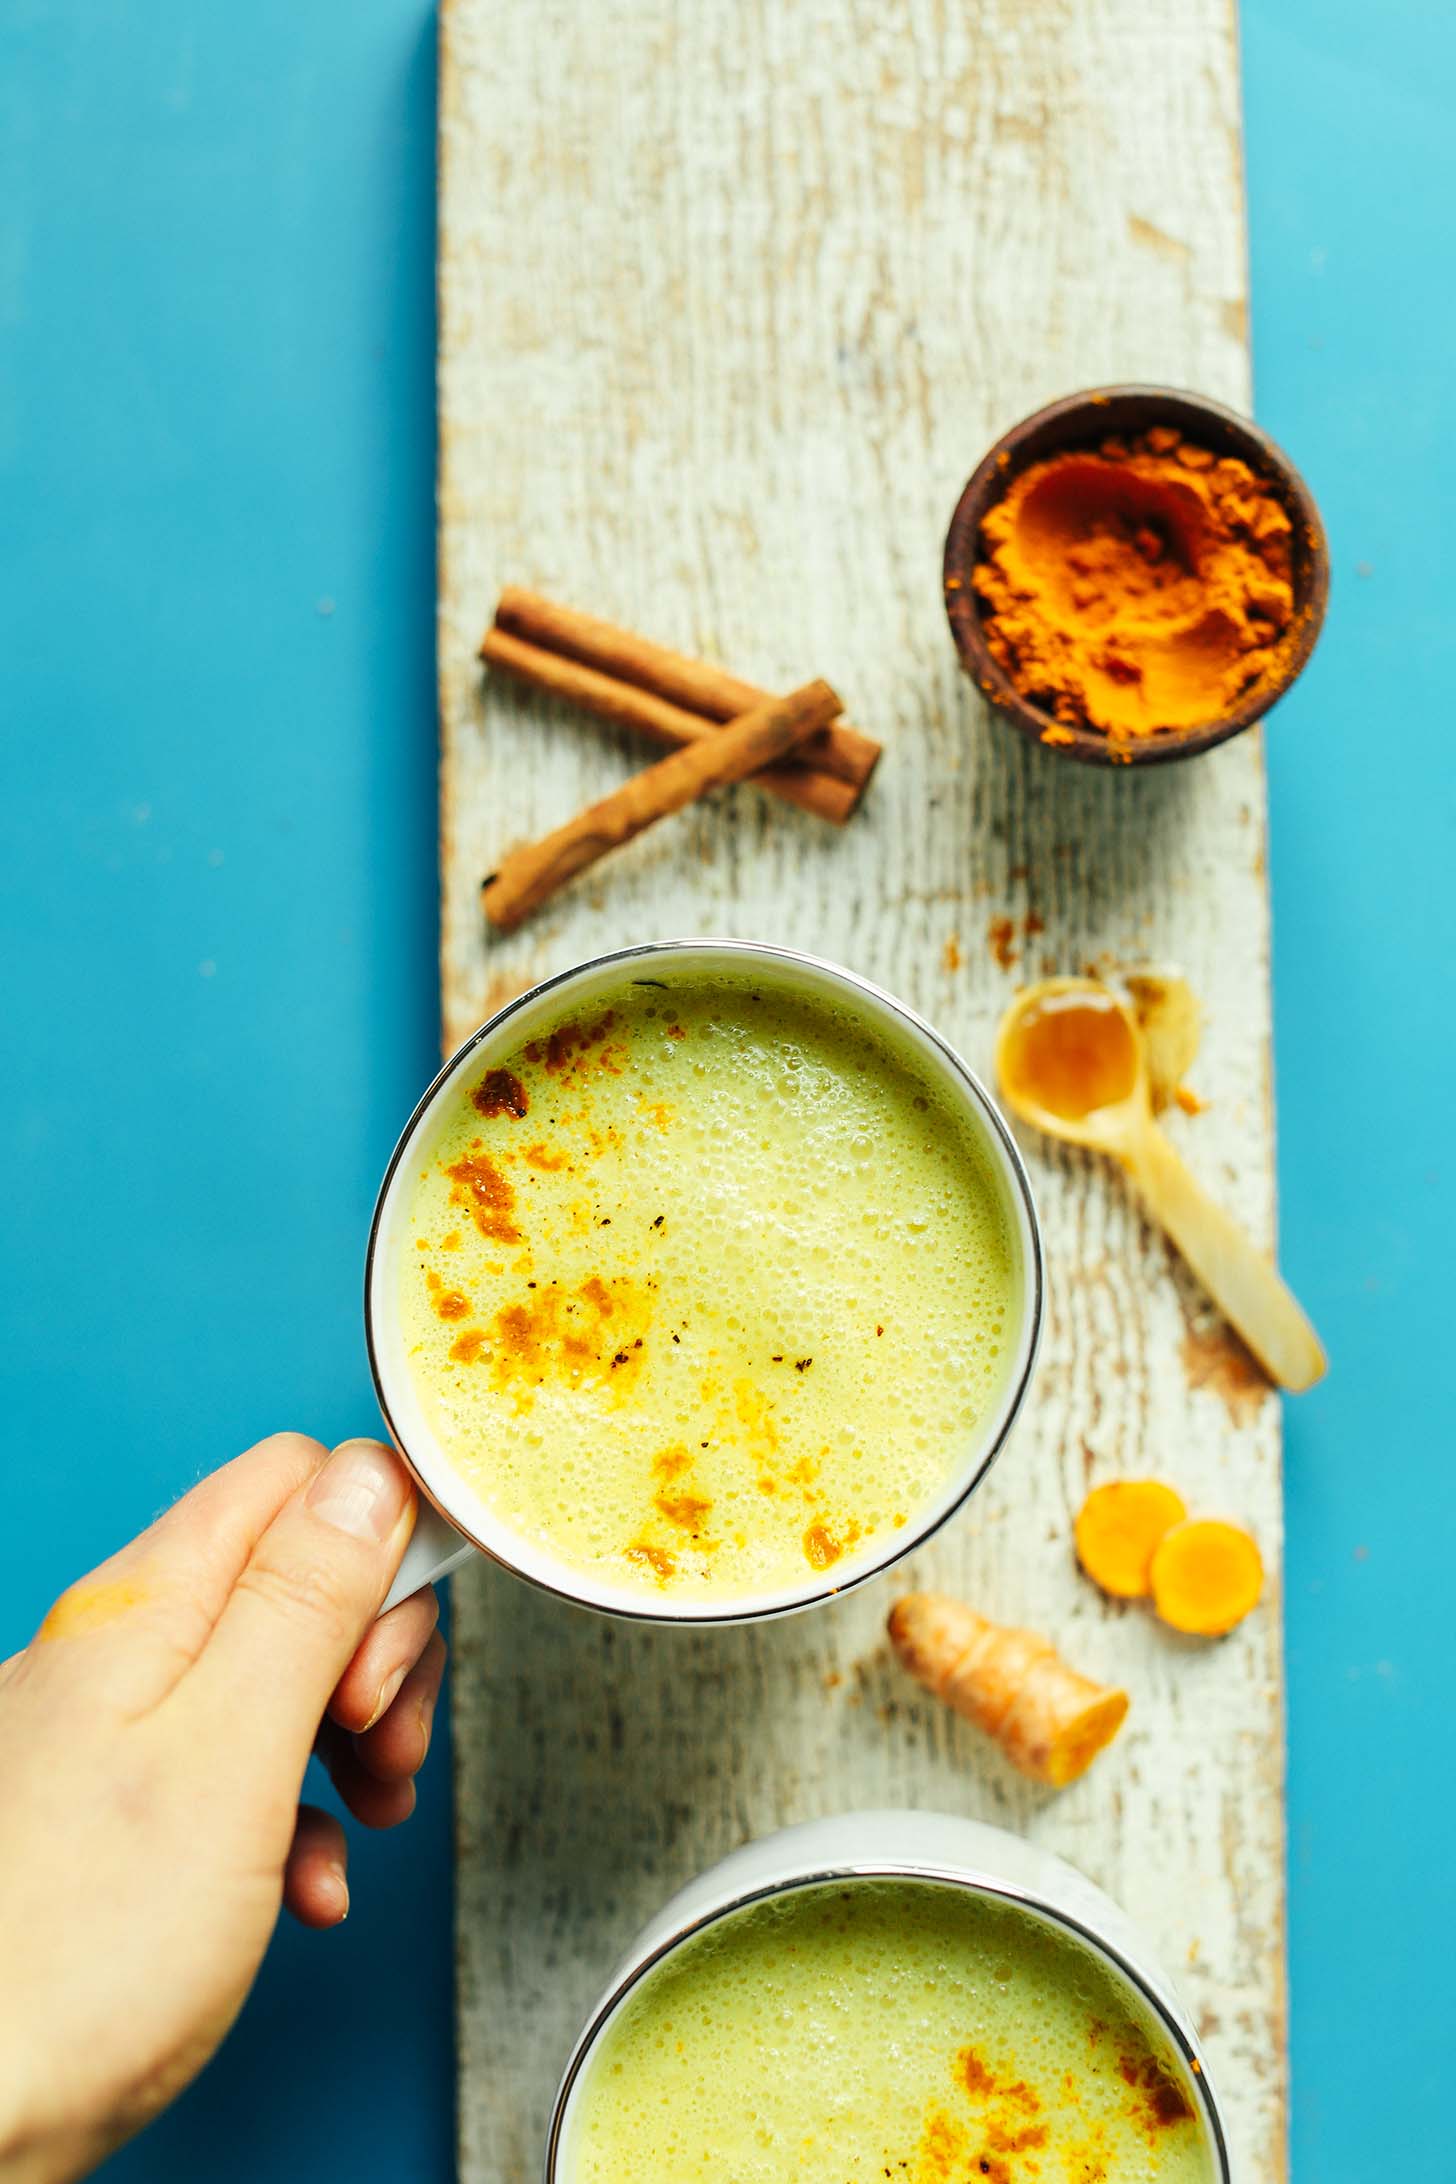 Grabbing a mug of our gluten-free vegan Golden Milk Latte for an anti-inflammatory afternoon treat